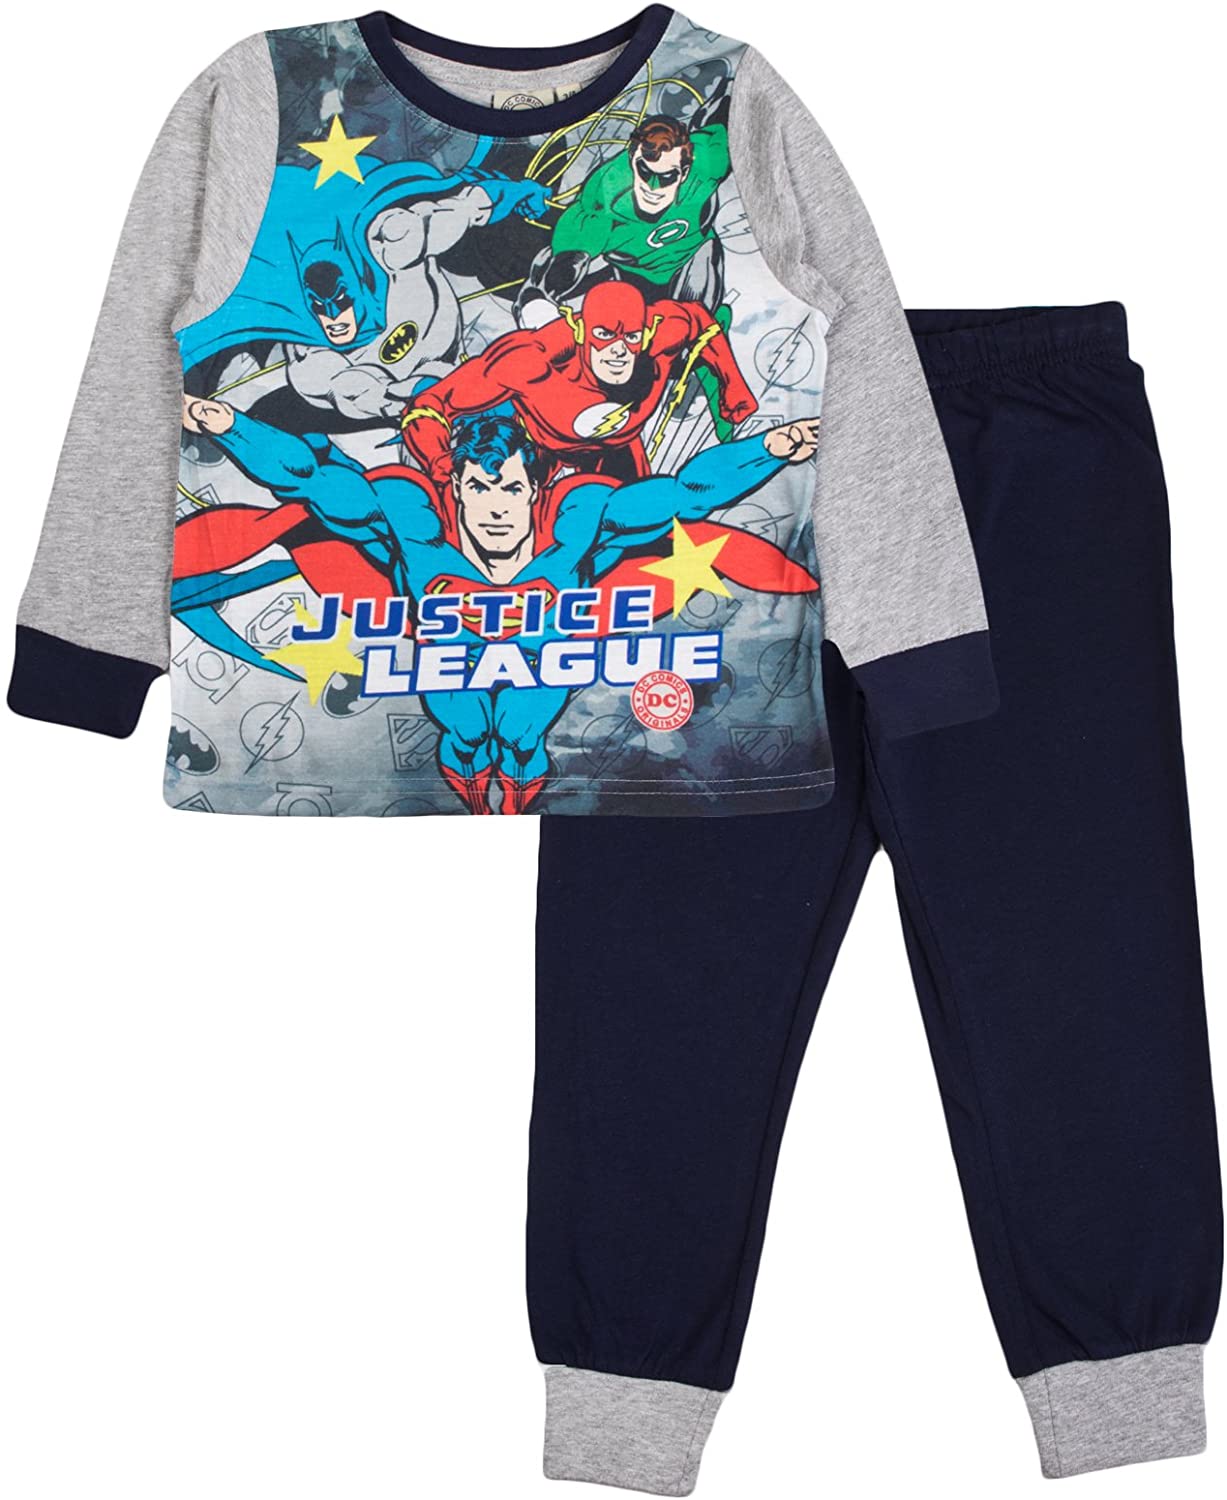 DC Comics Justice League Boys Pyjamas - Stockpoint Apparel Outlet